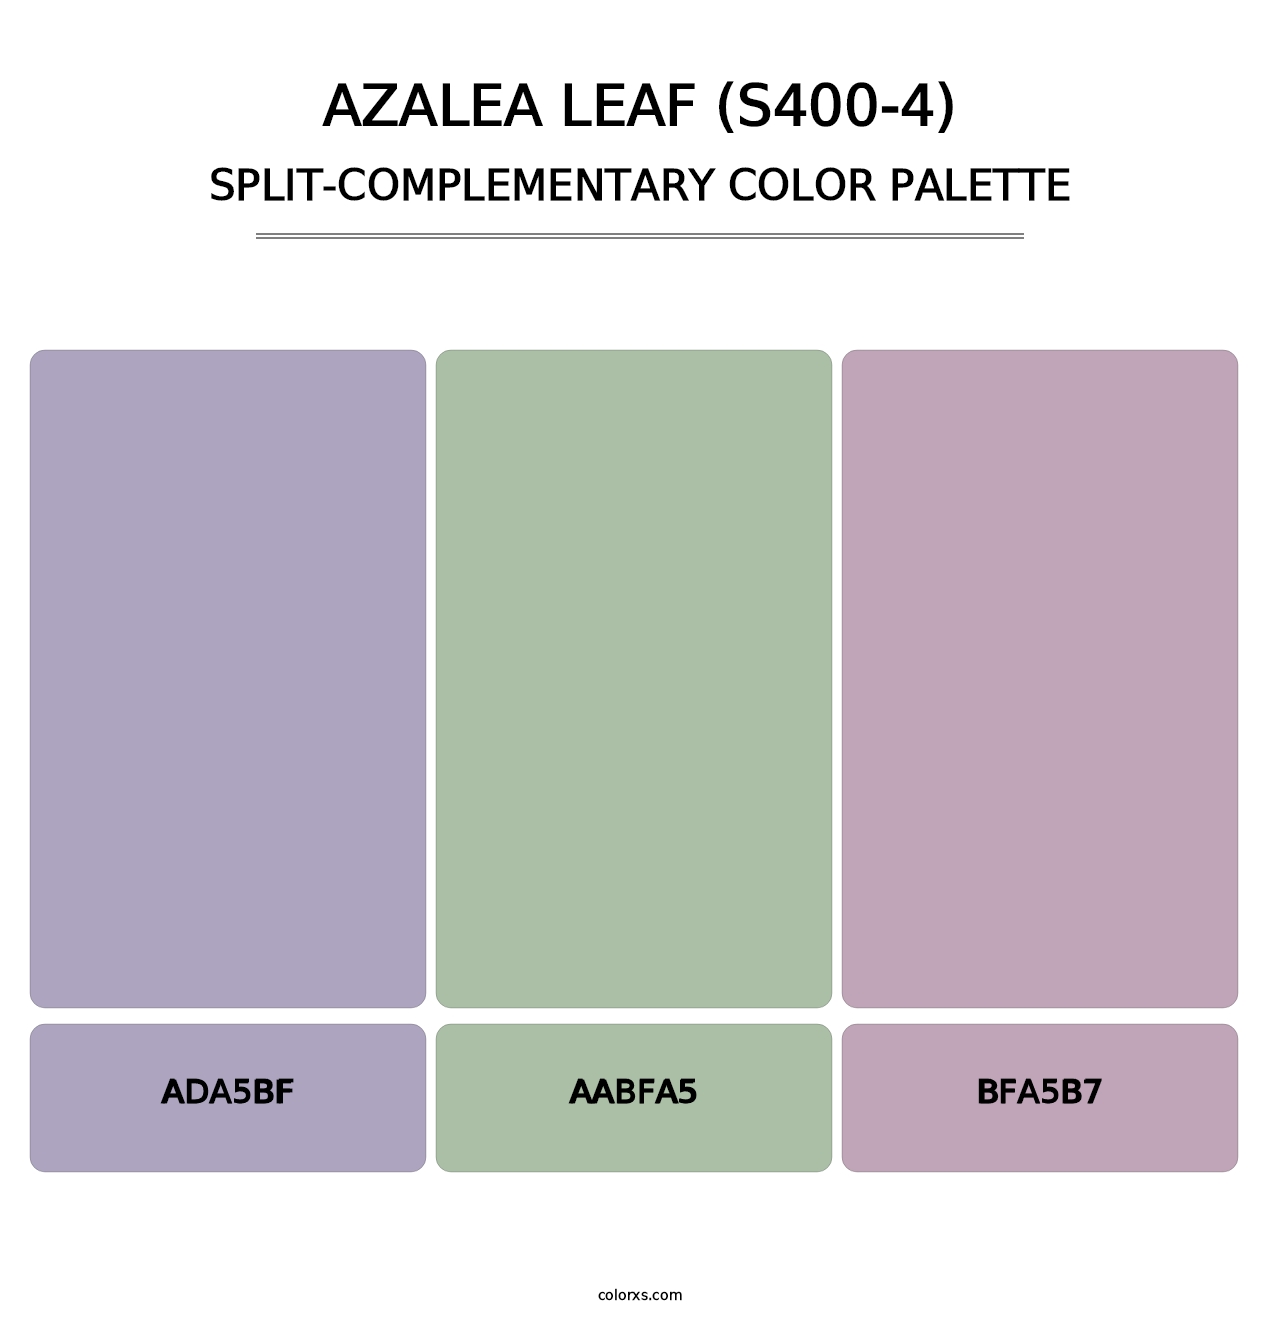 Azalea Leaf (S400-4) - Split-Complementary Color Palette